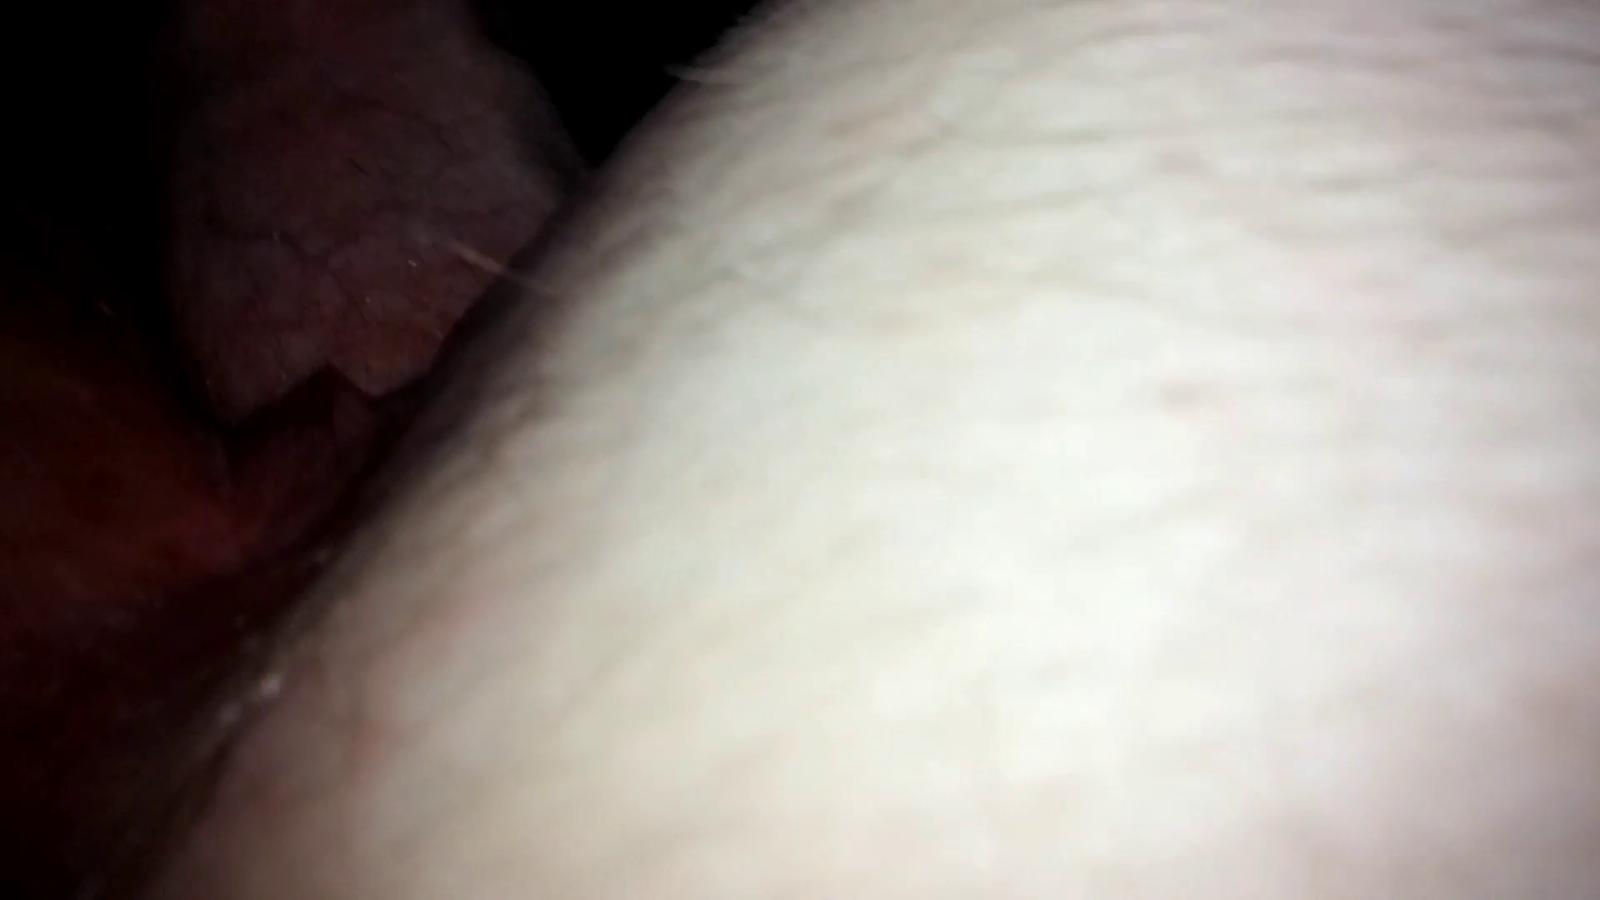 Video post by Degener8one